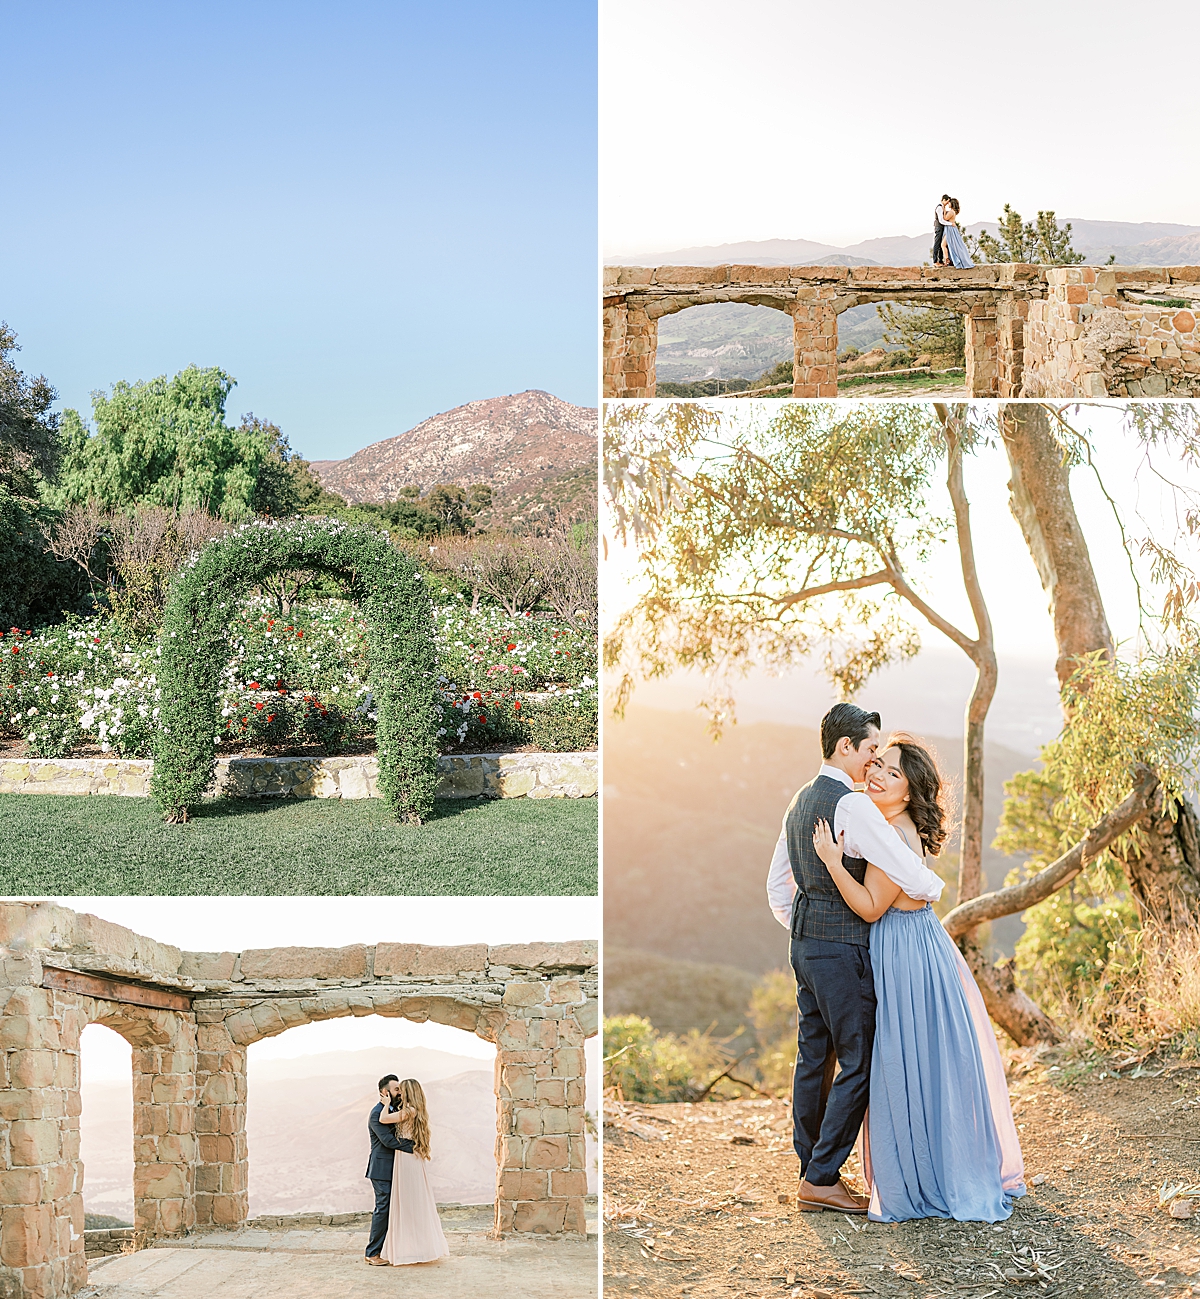 Intimate Estates are incredible locations for Santa Barbara Engagement Photos